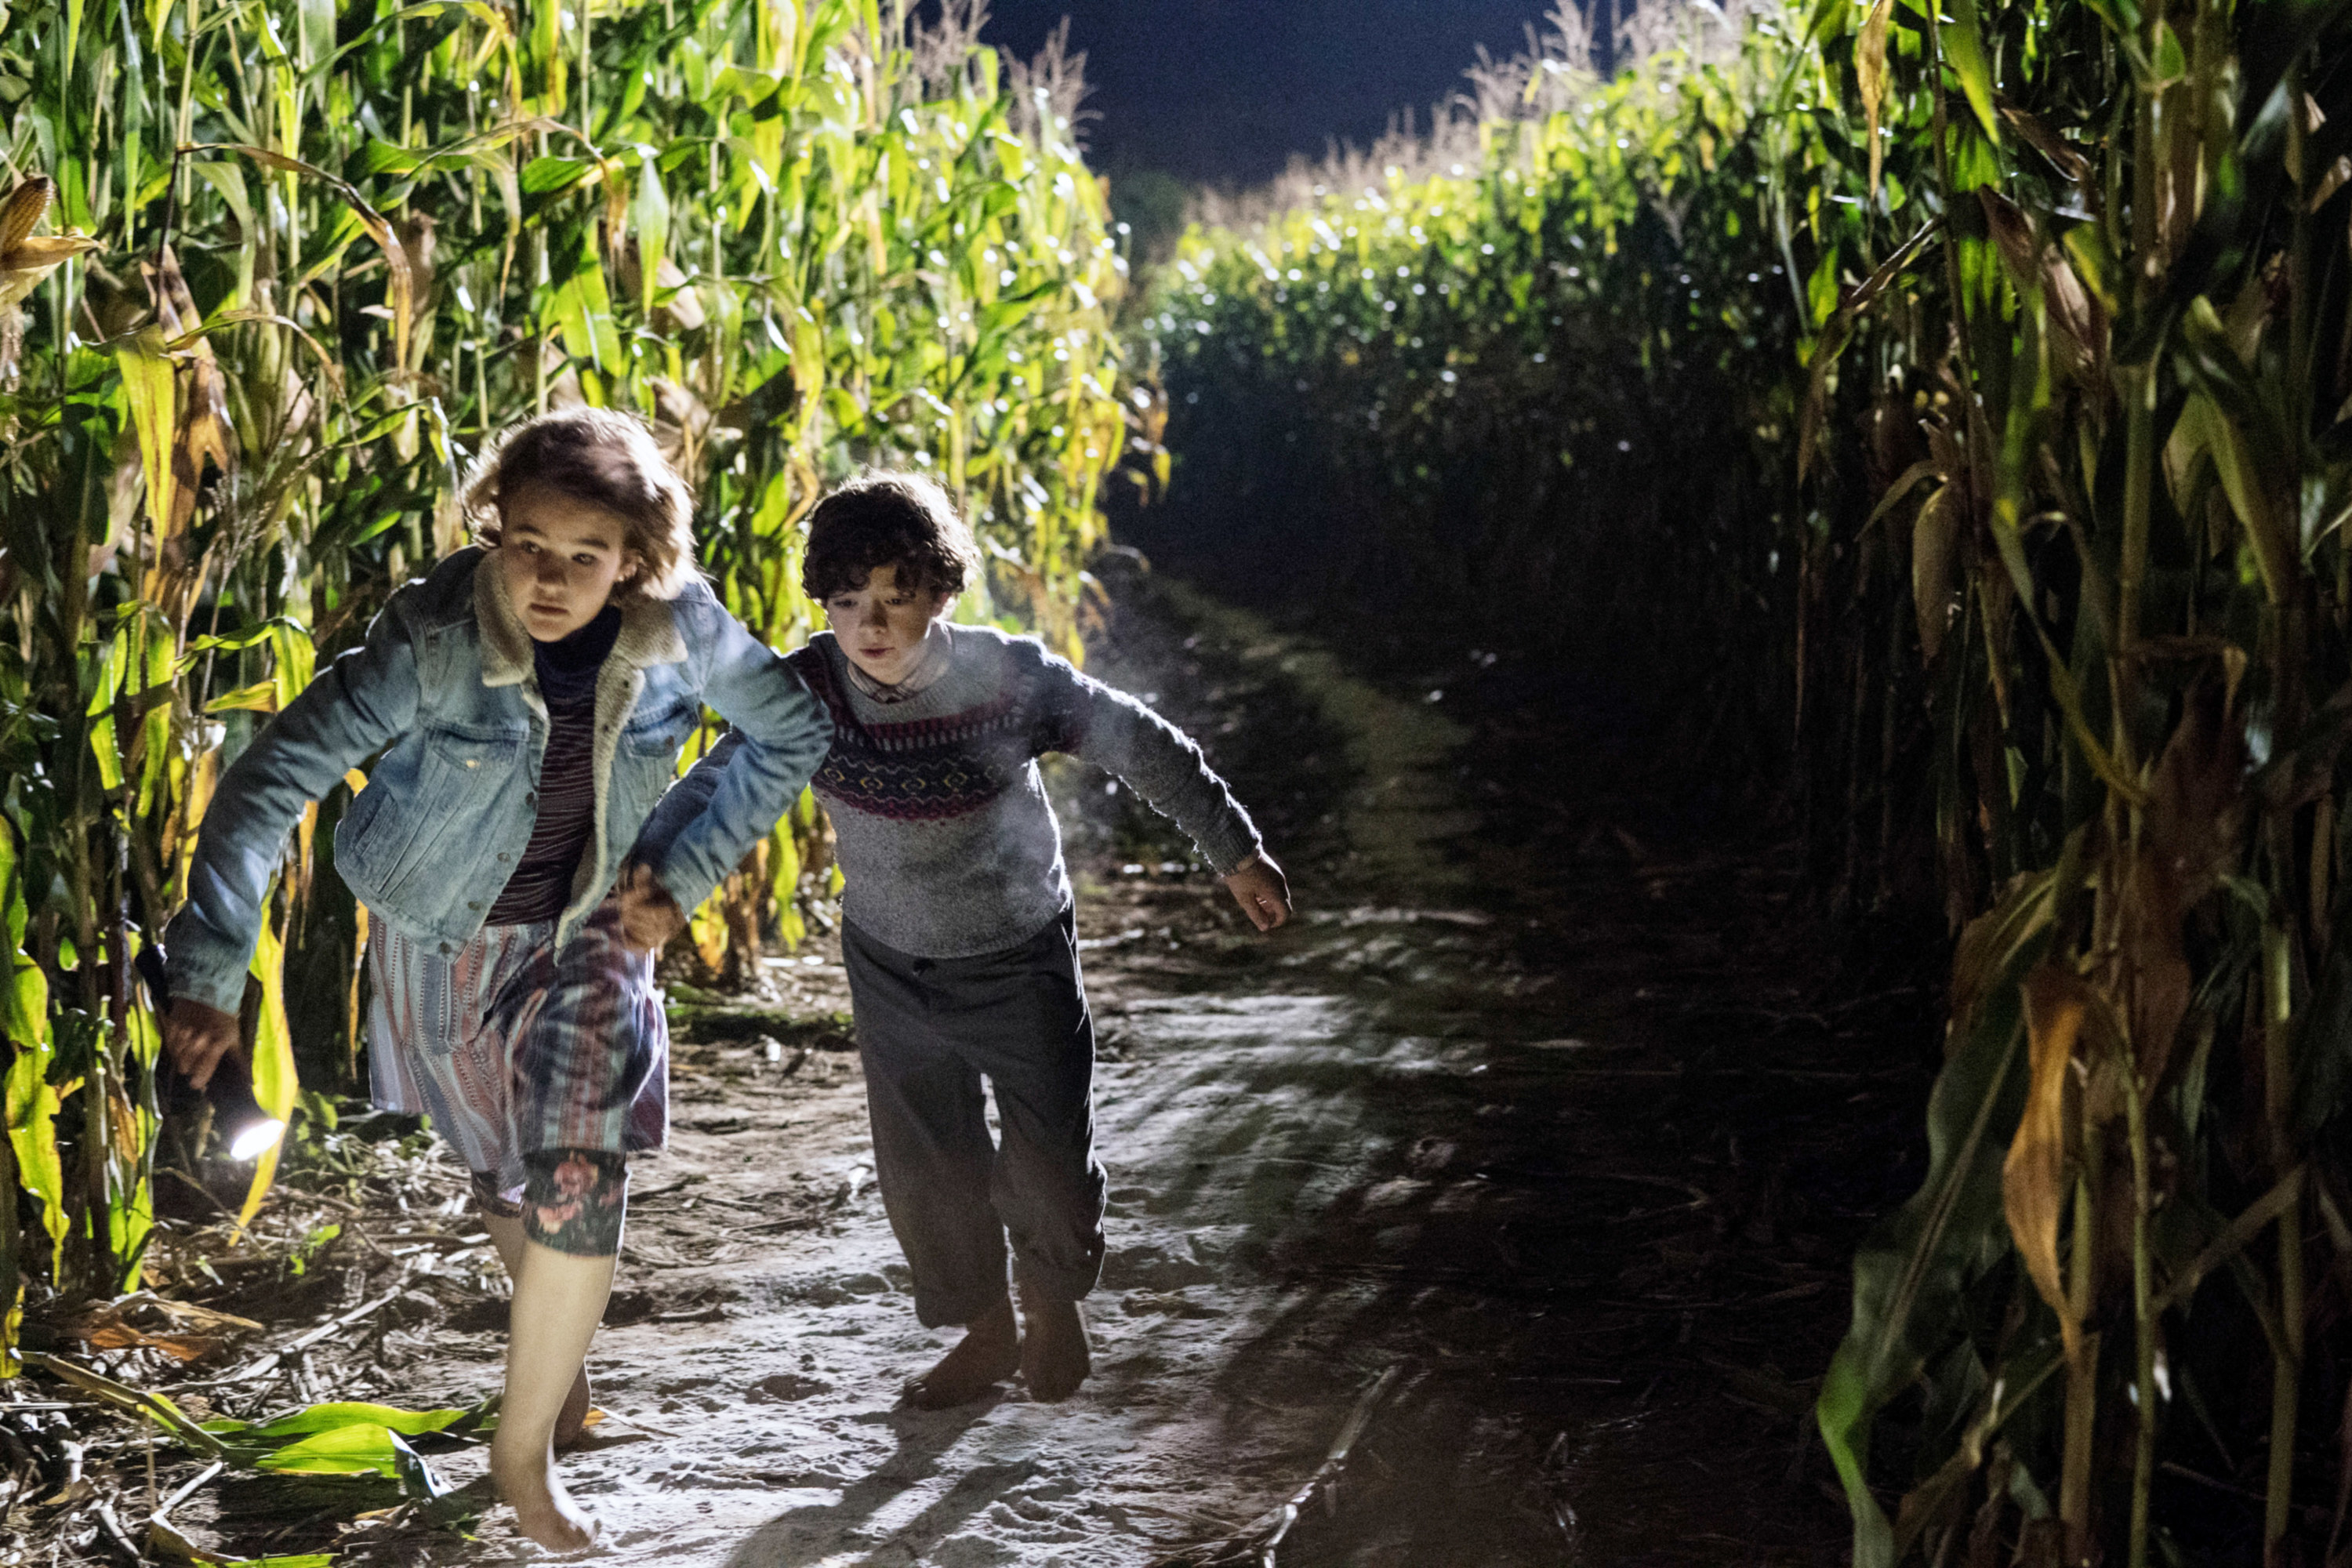 Two children run through a corn field